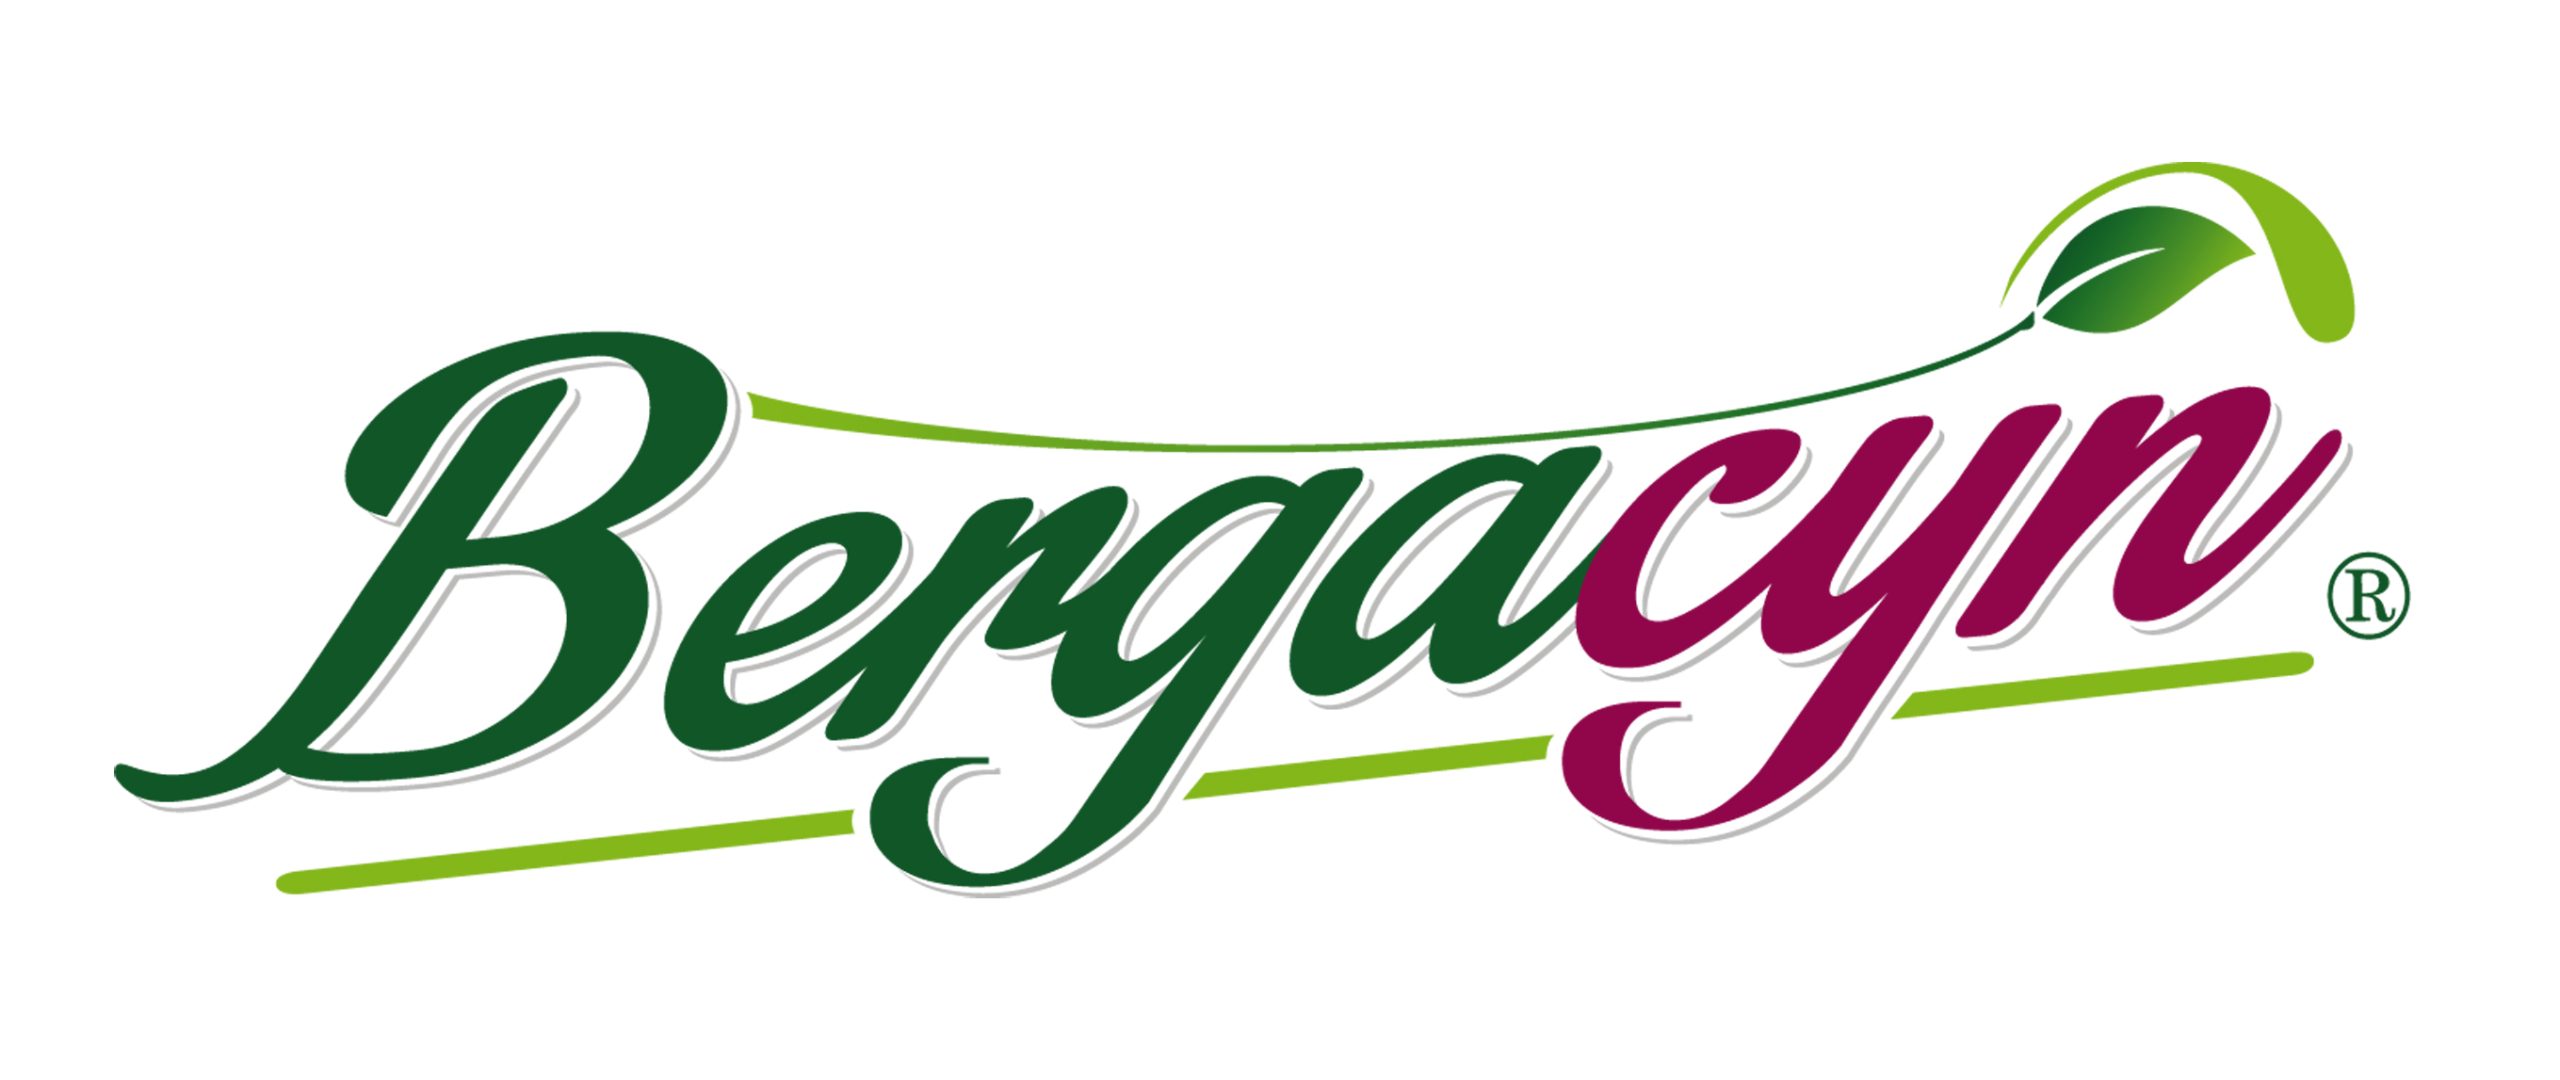 Bergacyn_Logotipo